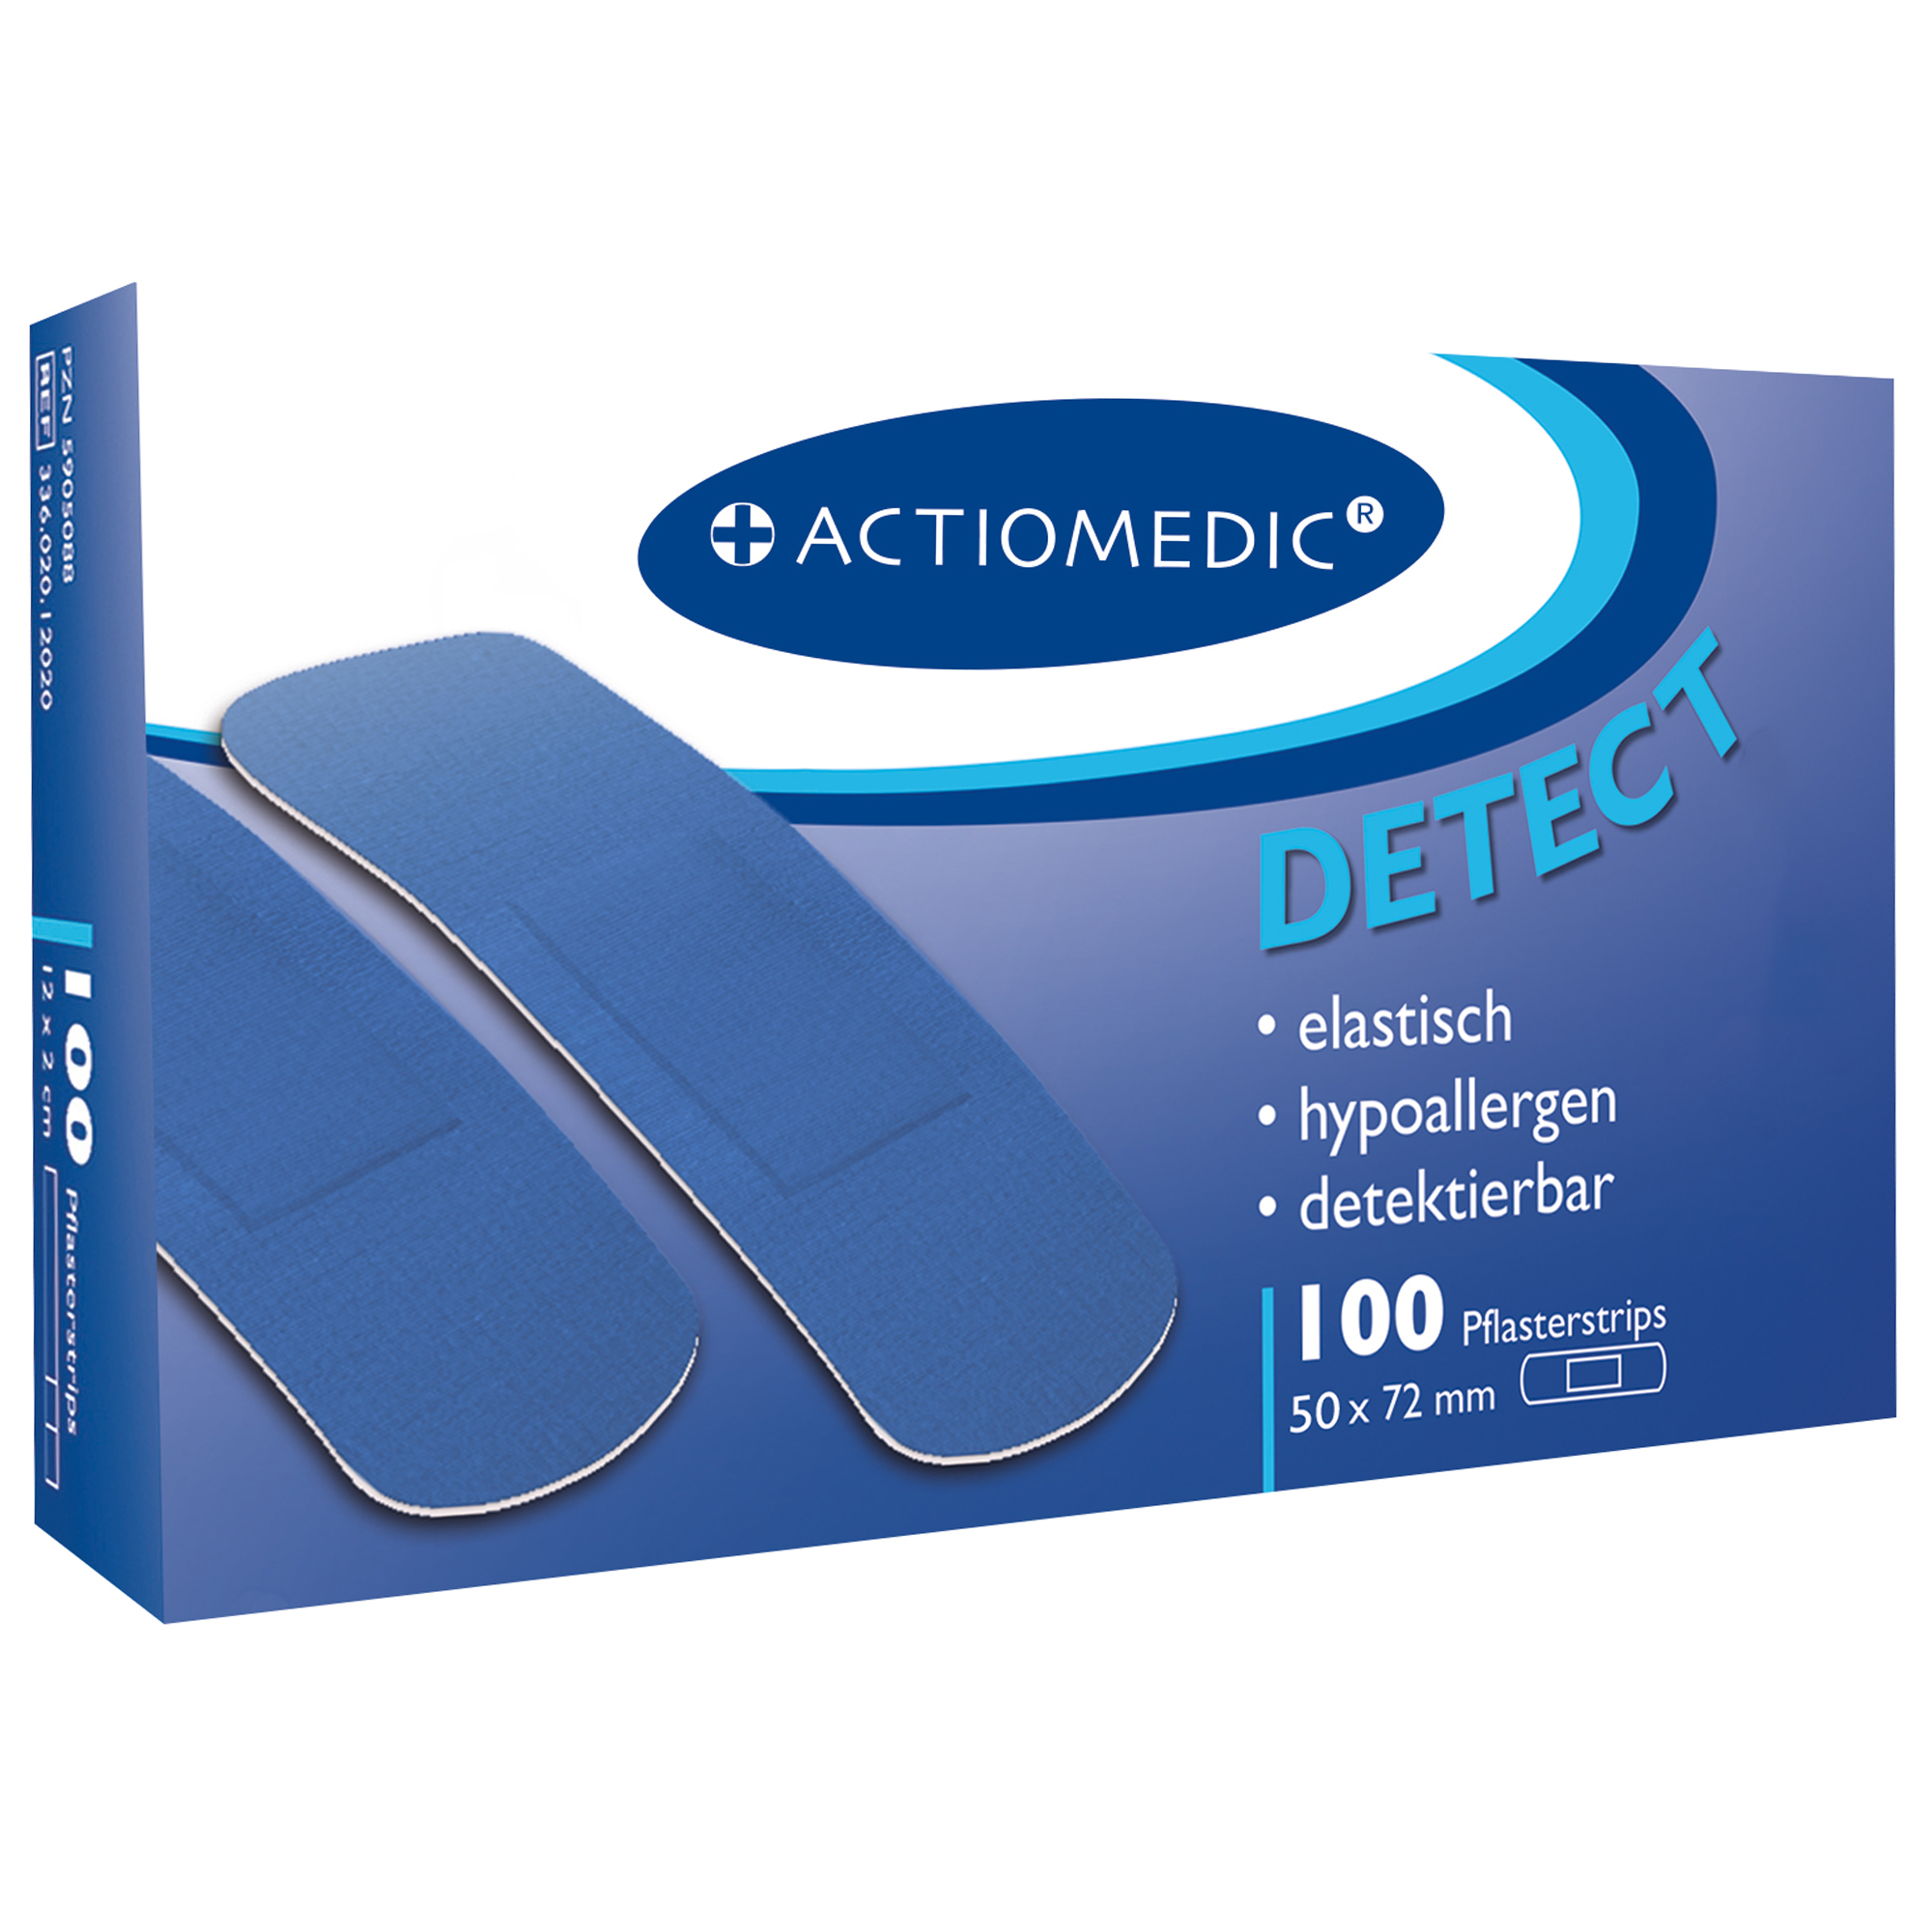 Actiomedic® DETECT + ELASTIC Pflasterstrips 50 x 72 mm